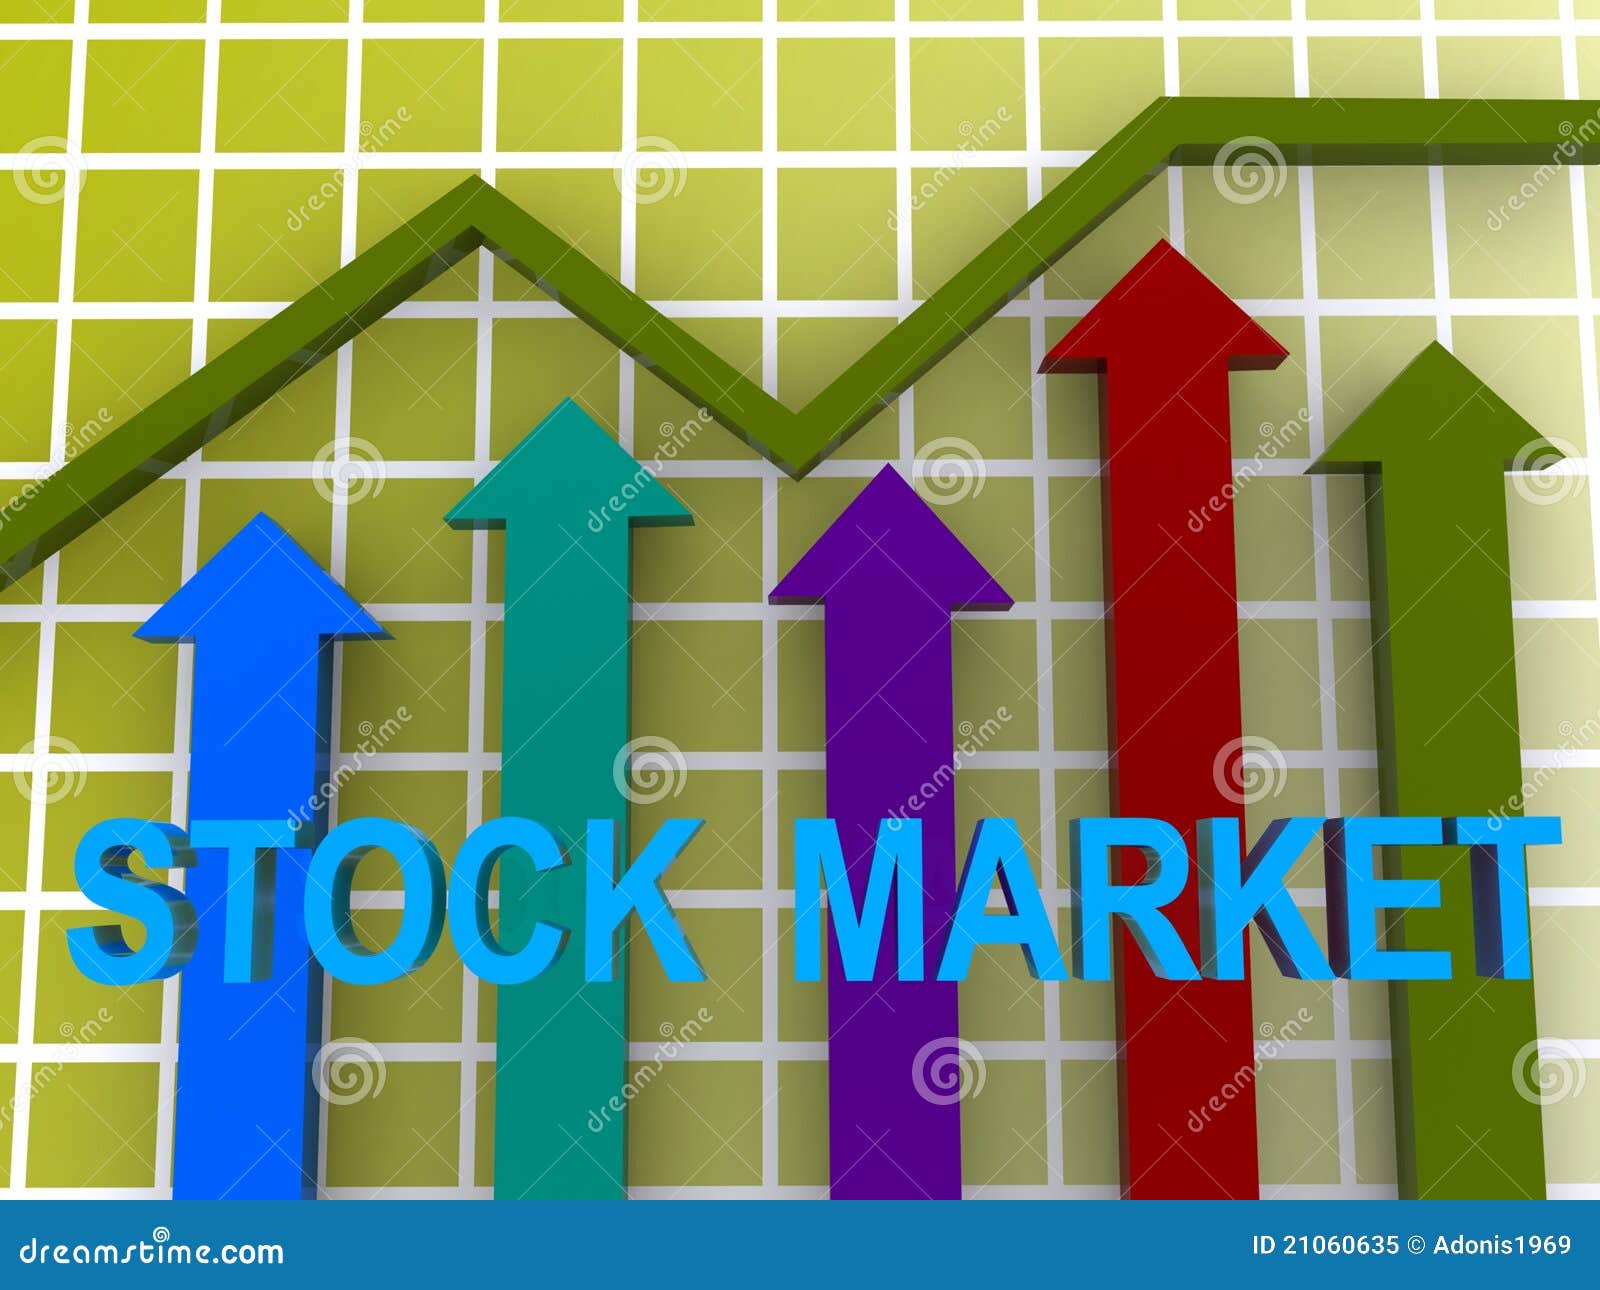 clipart stock market graph - photo #40